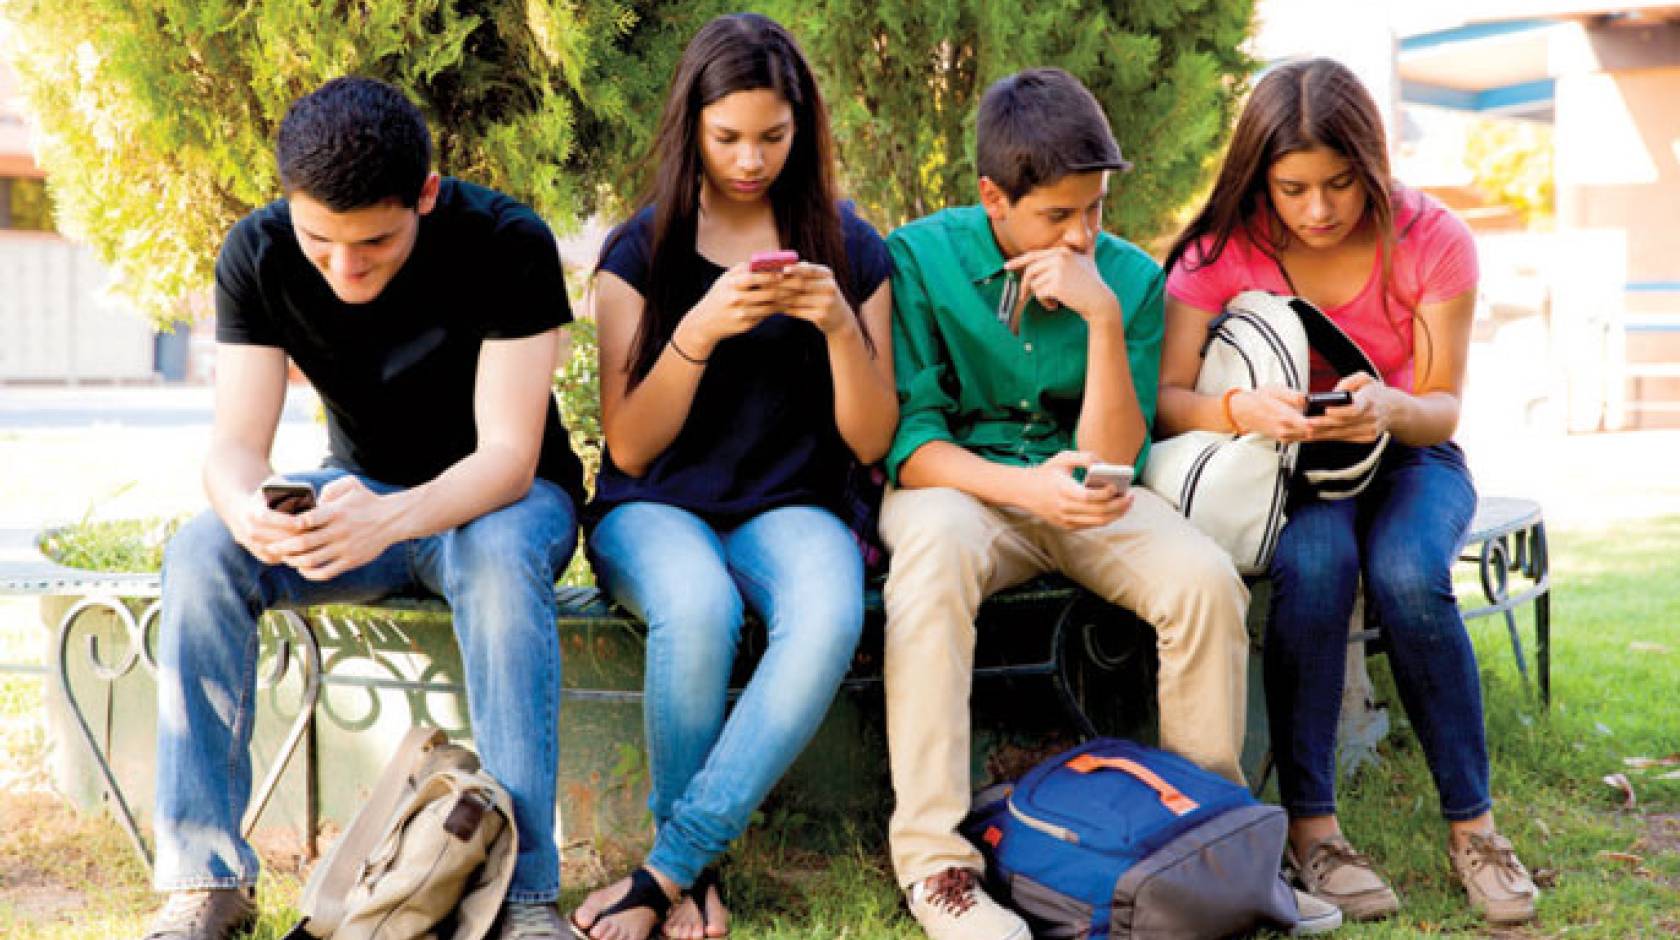 UC Irvine texting teens